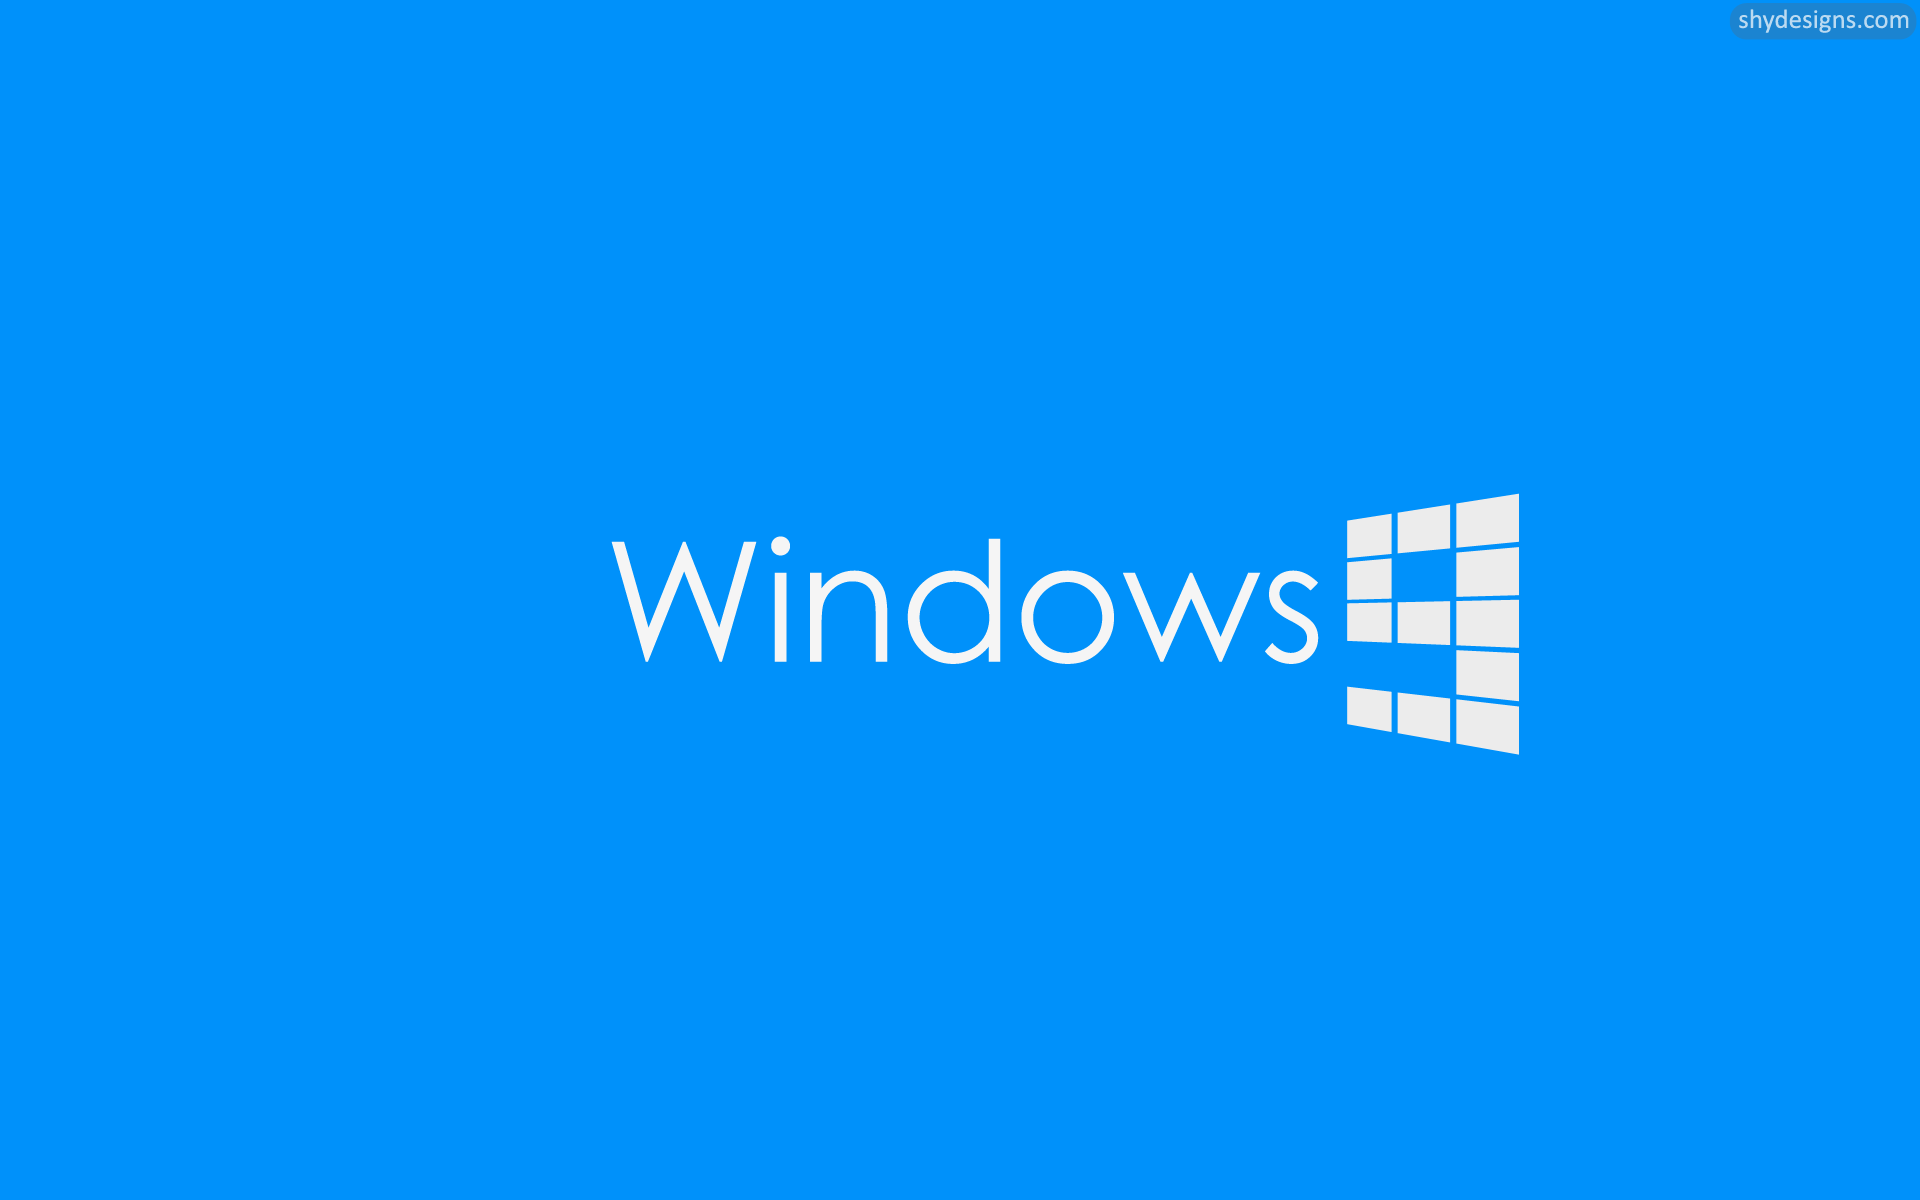 Windows 9 Wallpapers - Wallpaper Cave